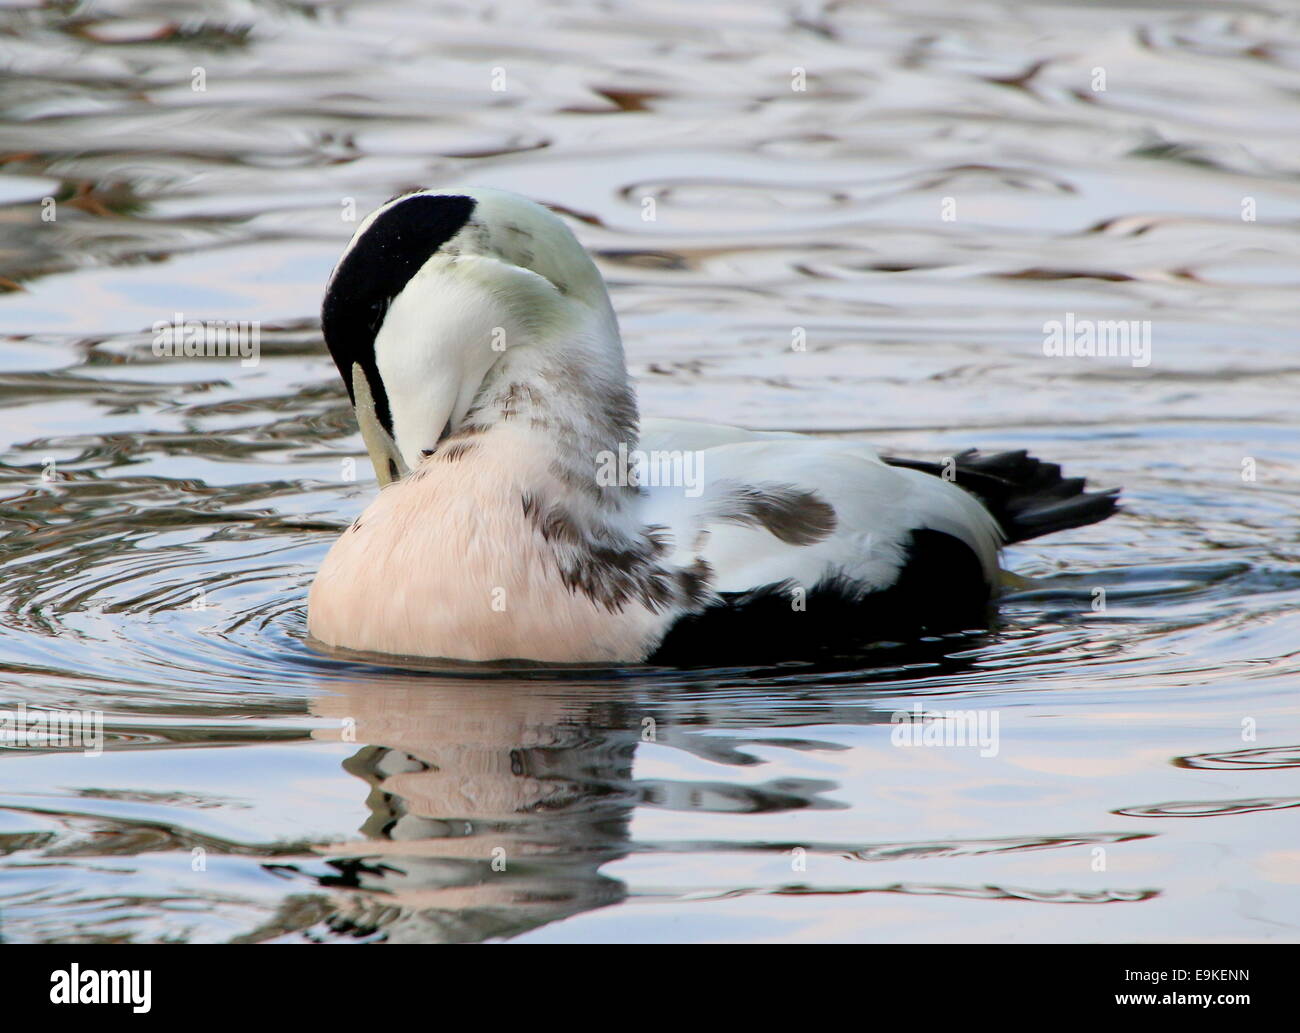 Male Common Eider duck (Somateria mollissima) swimming in a lake, preening his feathers Stock Photo